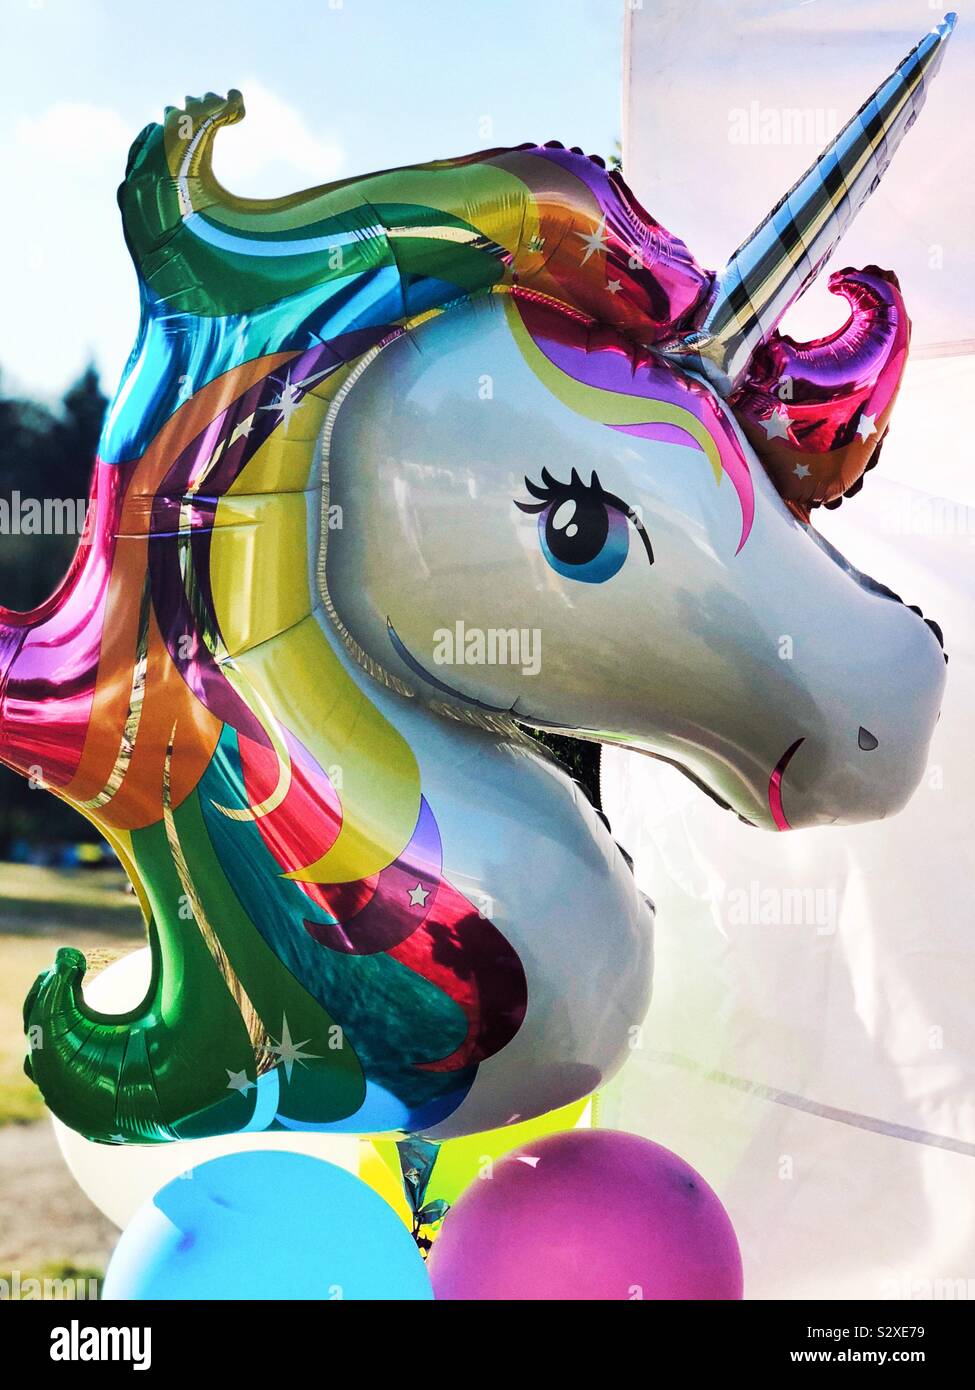 unicorn helium balloon Stock Photo - Alamy